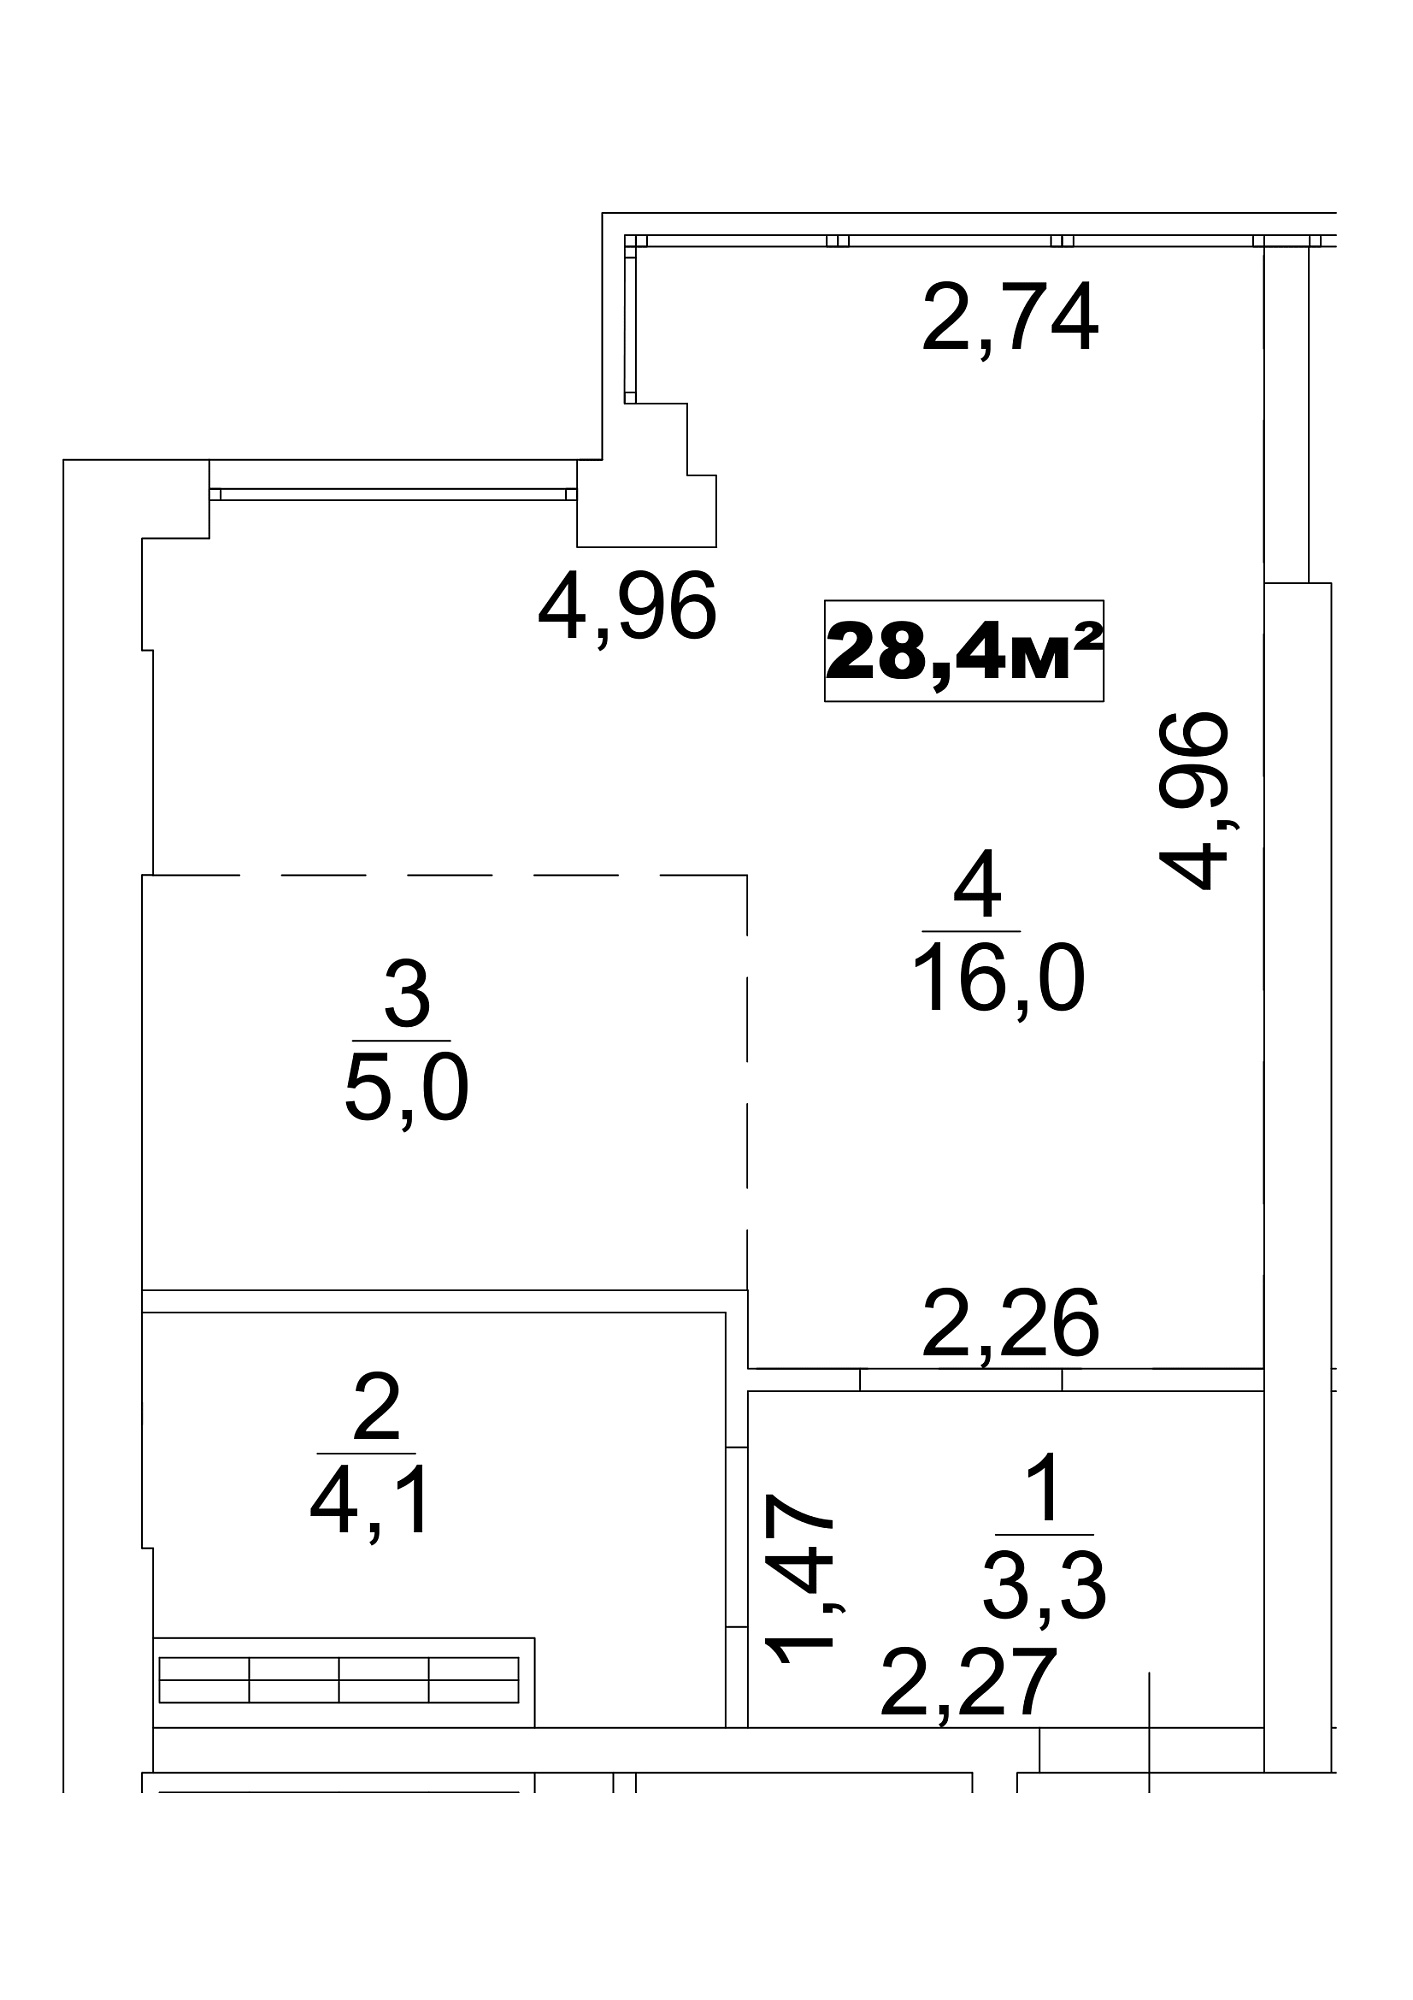 Планировка Smart-квартира площей 28.4м2, AB-13-04/0027б.